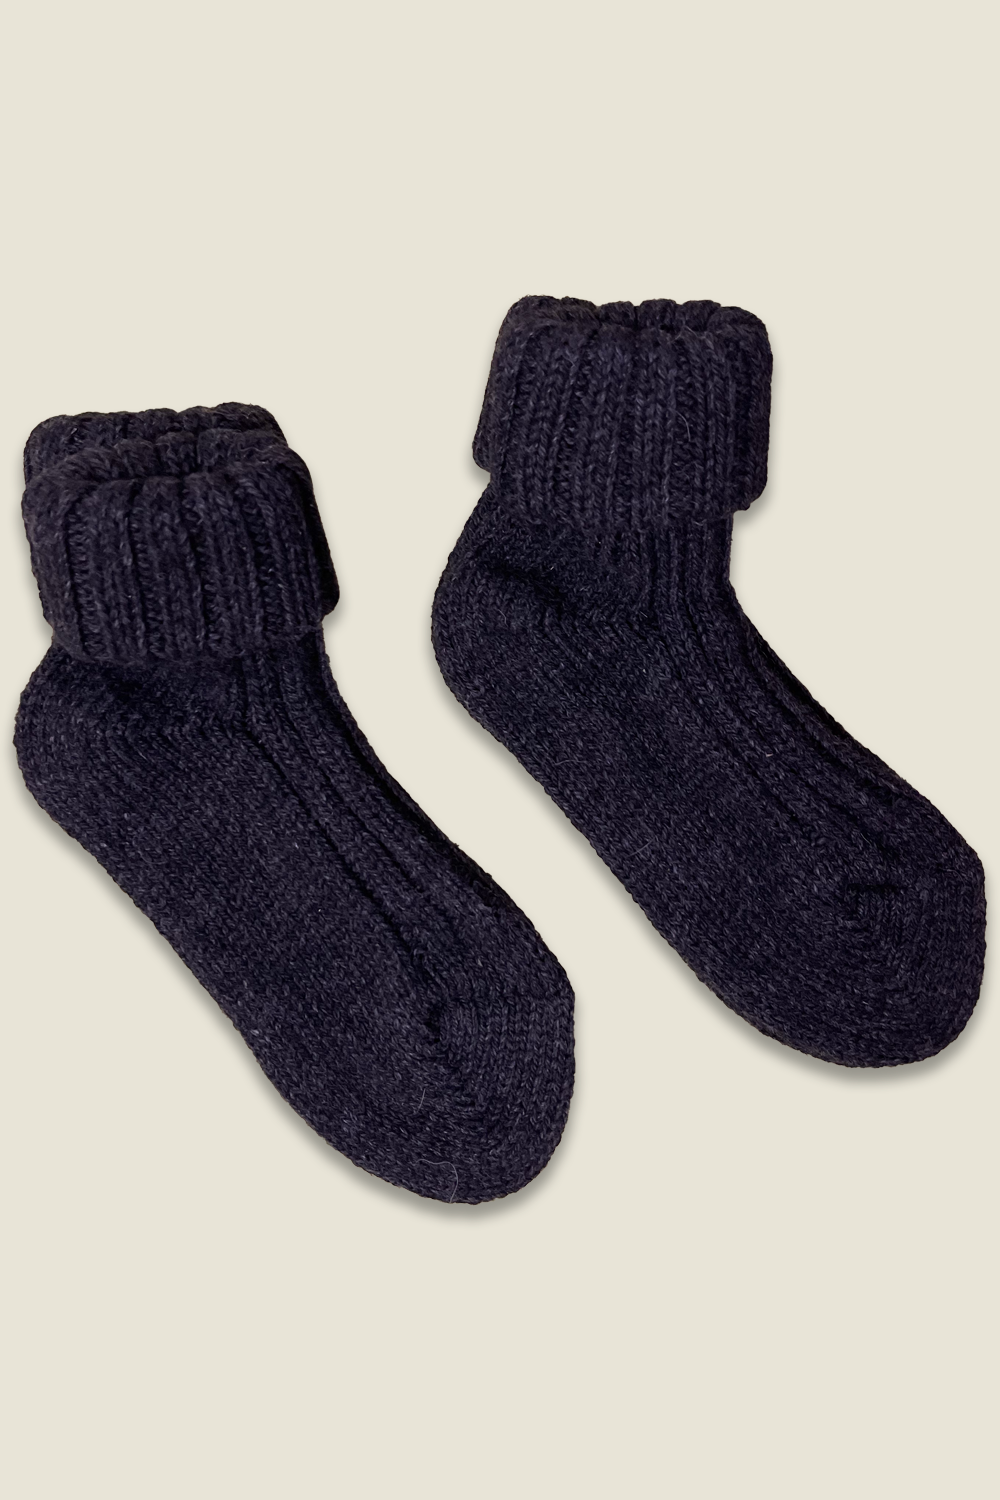 Alpaca Socks - anthracite - 2 pairs